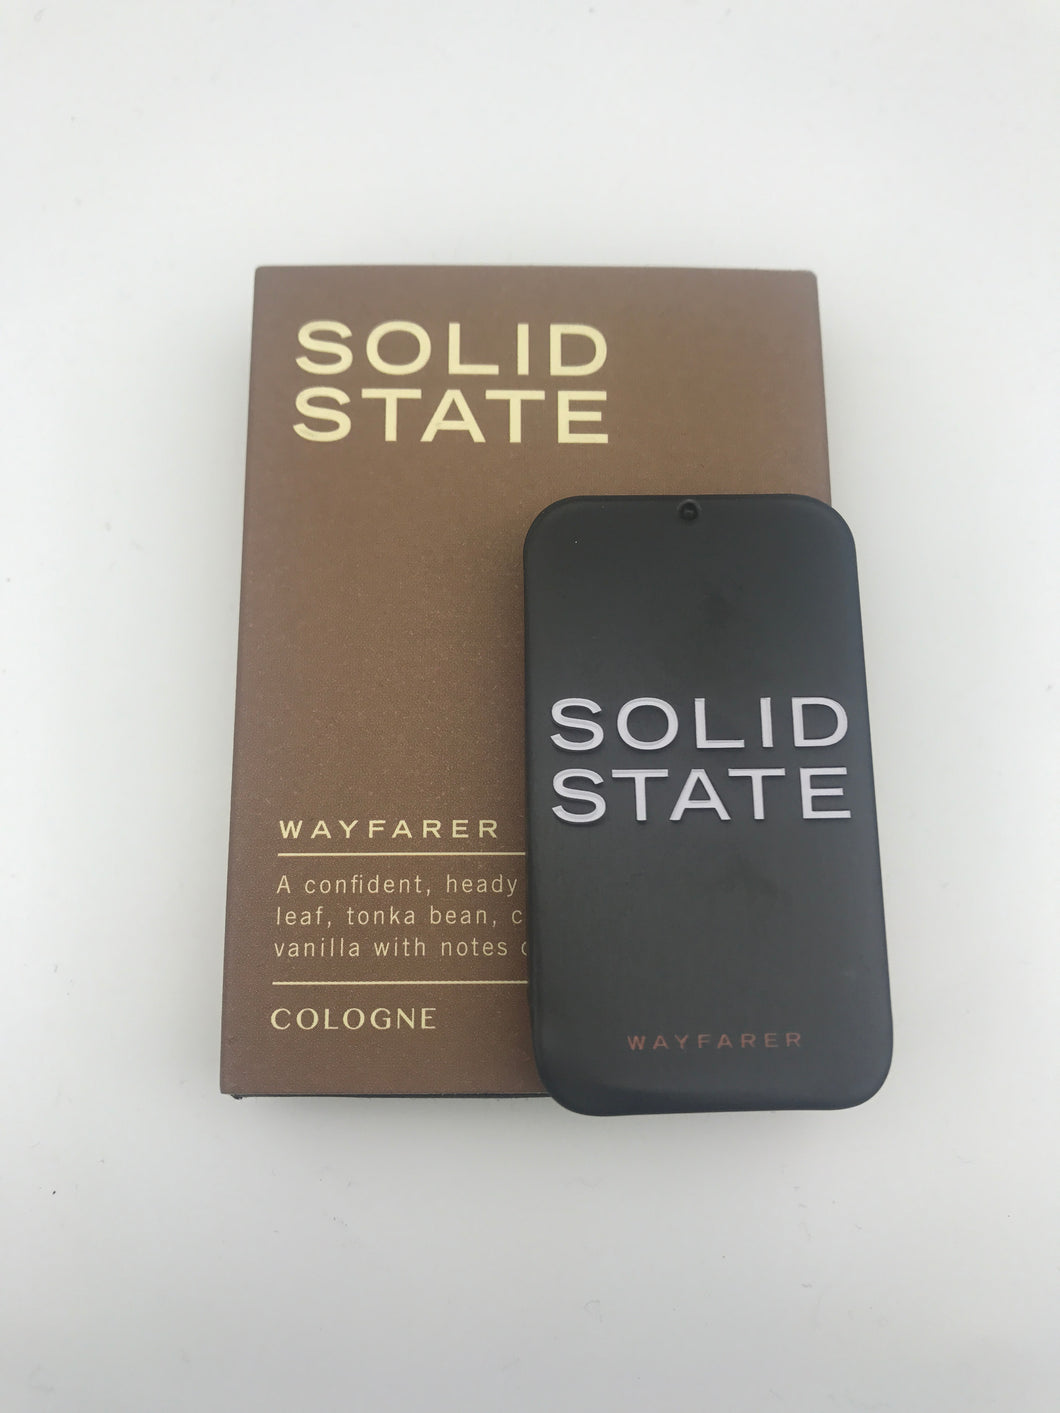 Solid State - Wayfarer